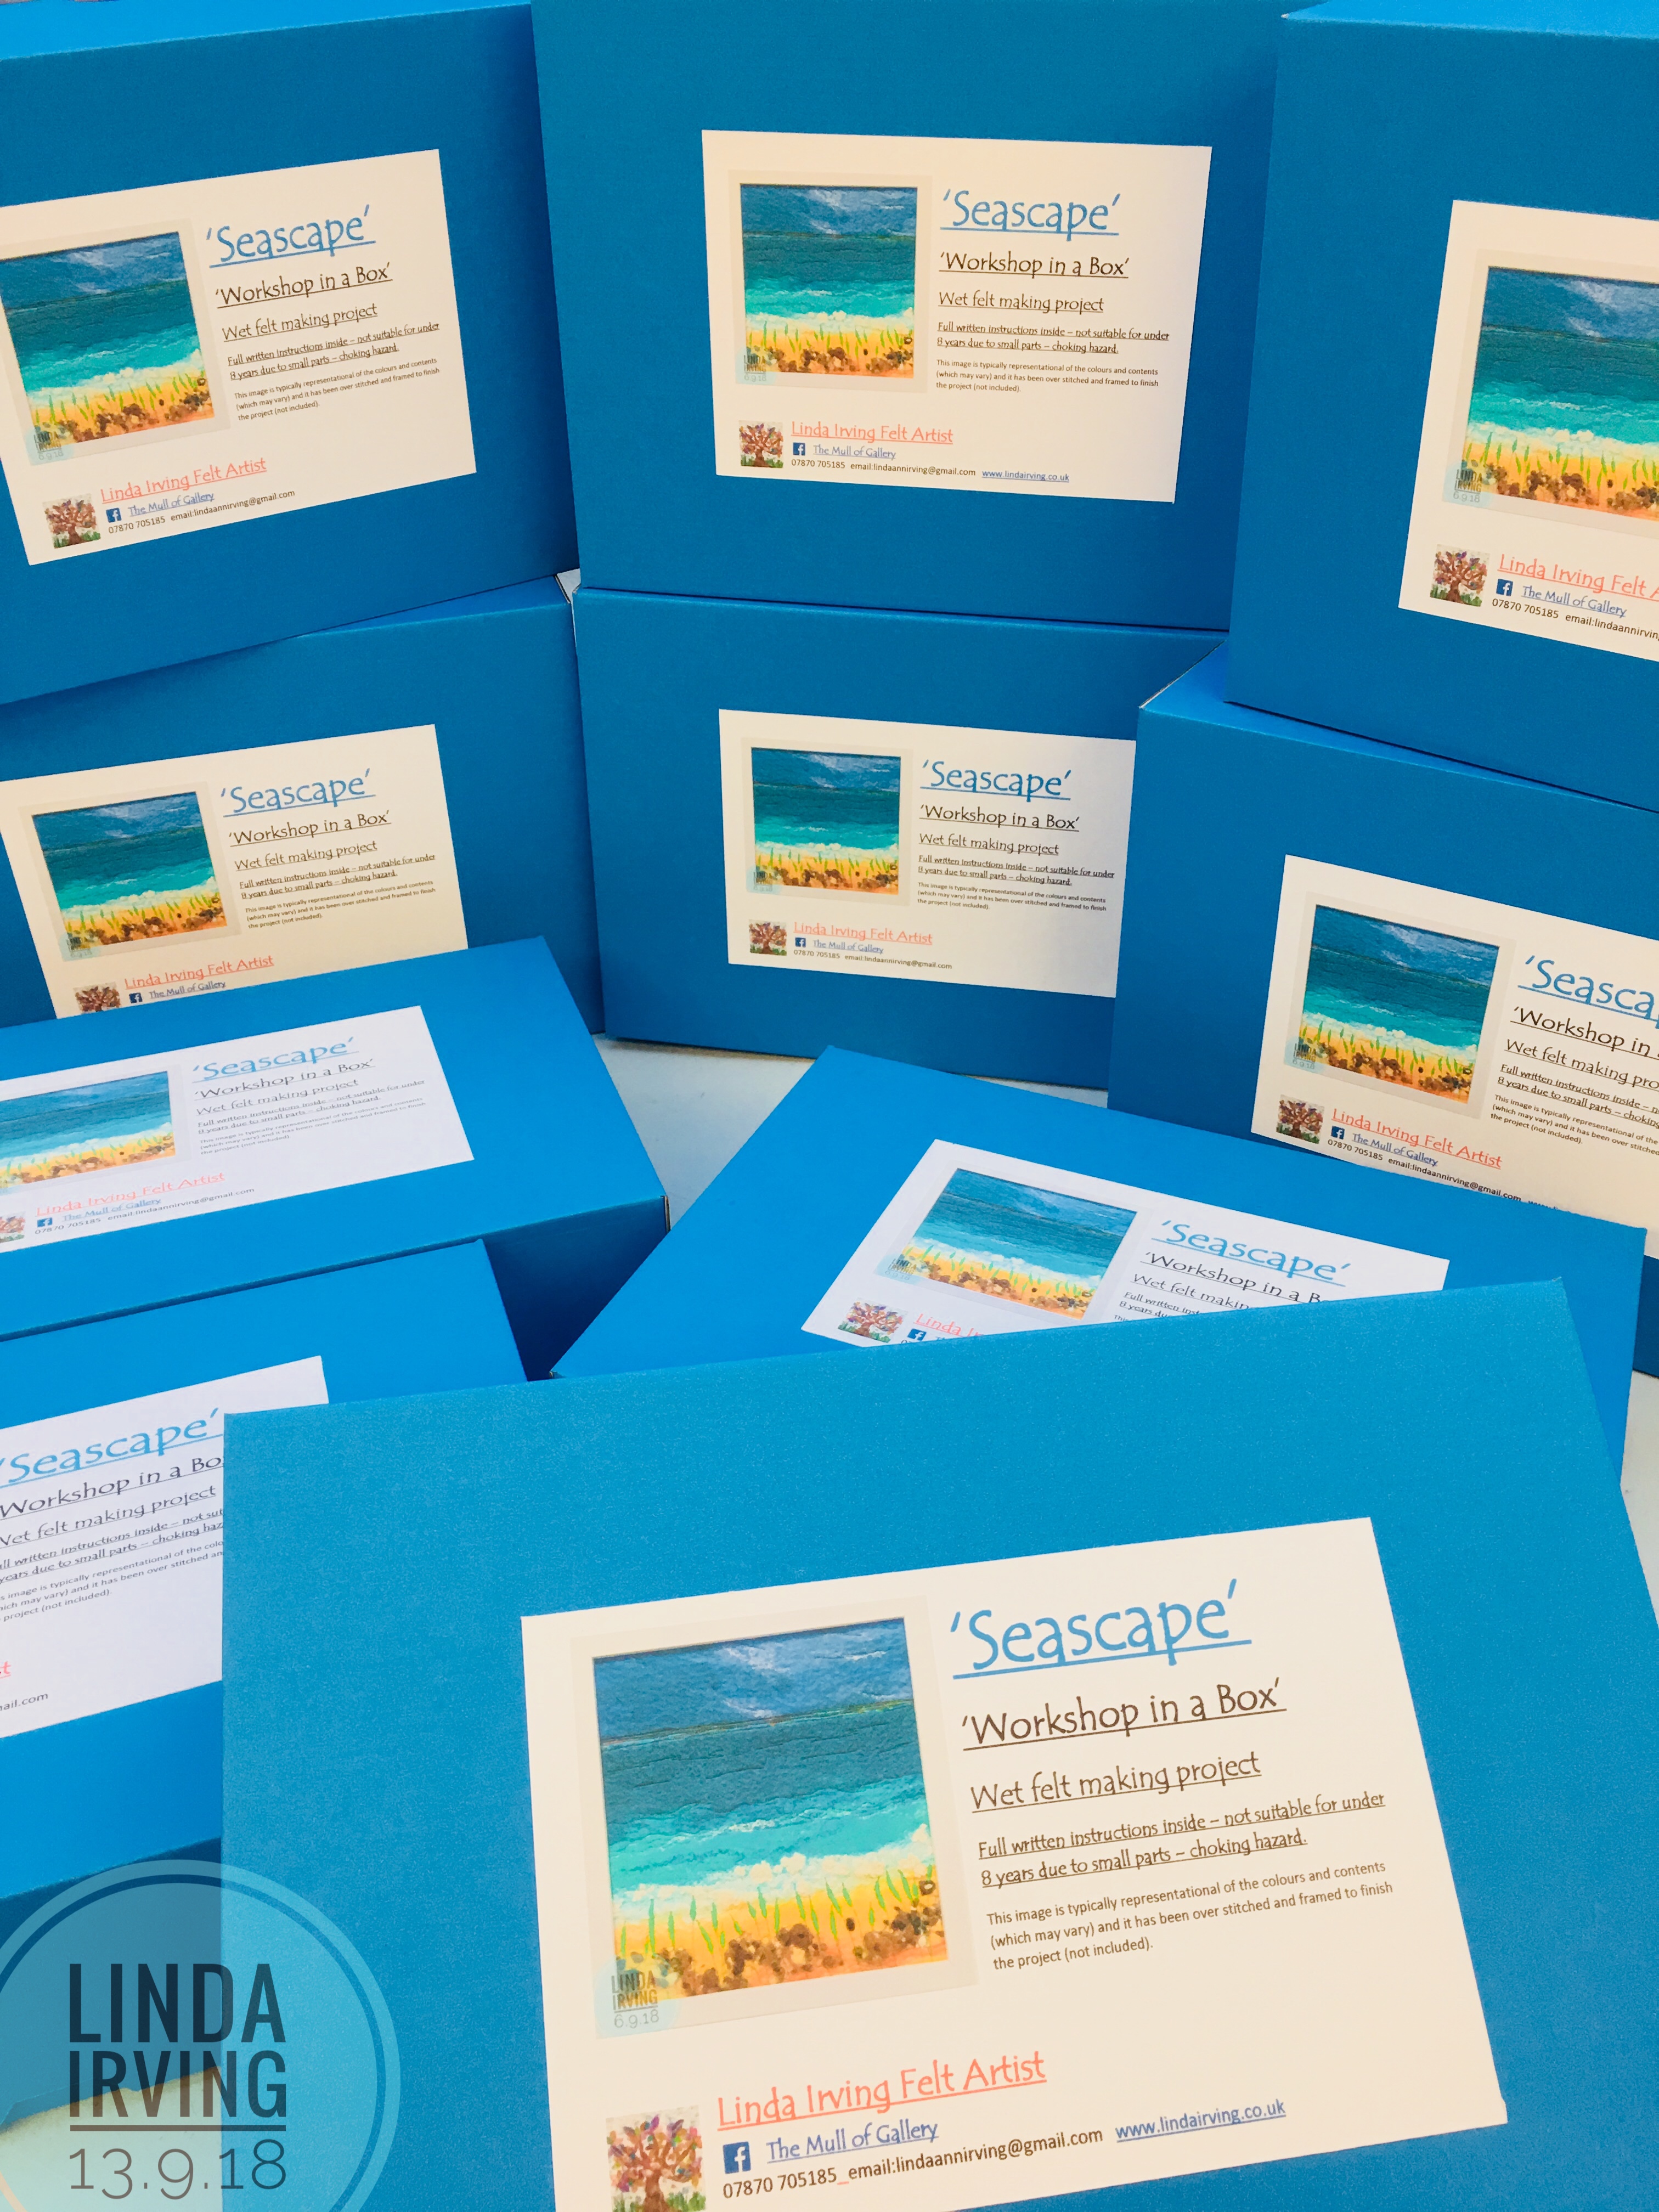 Seascape – Workshop in a Box